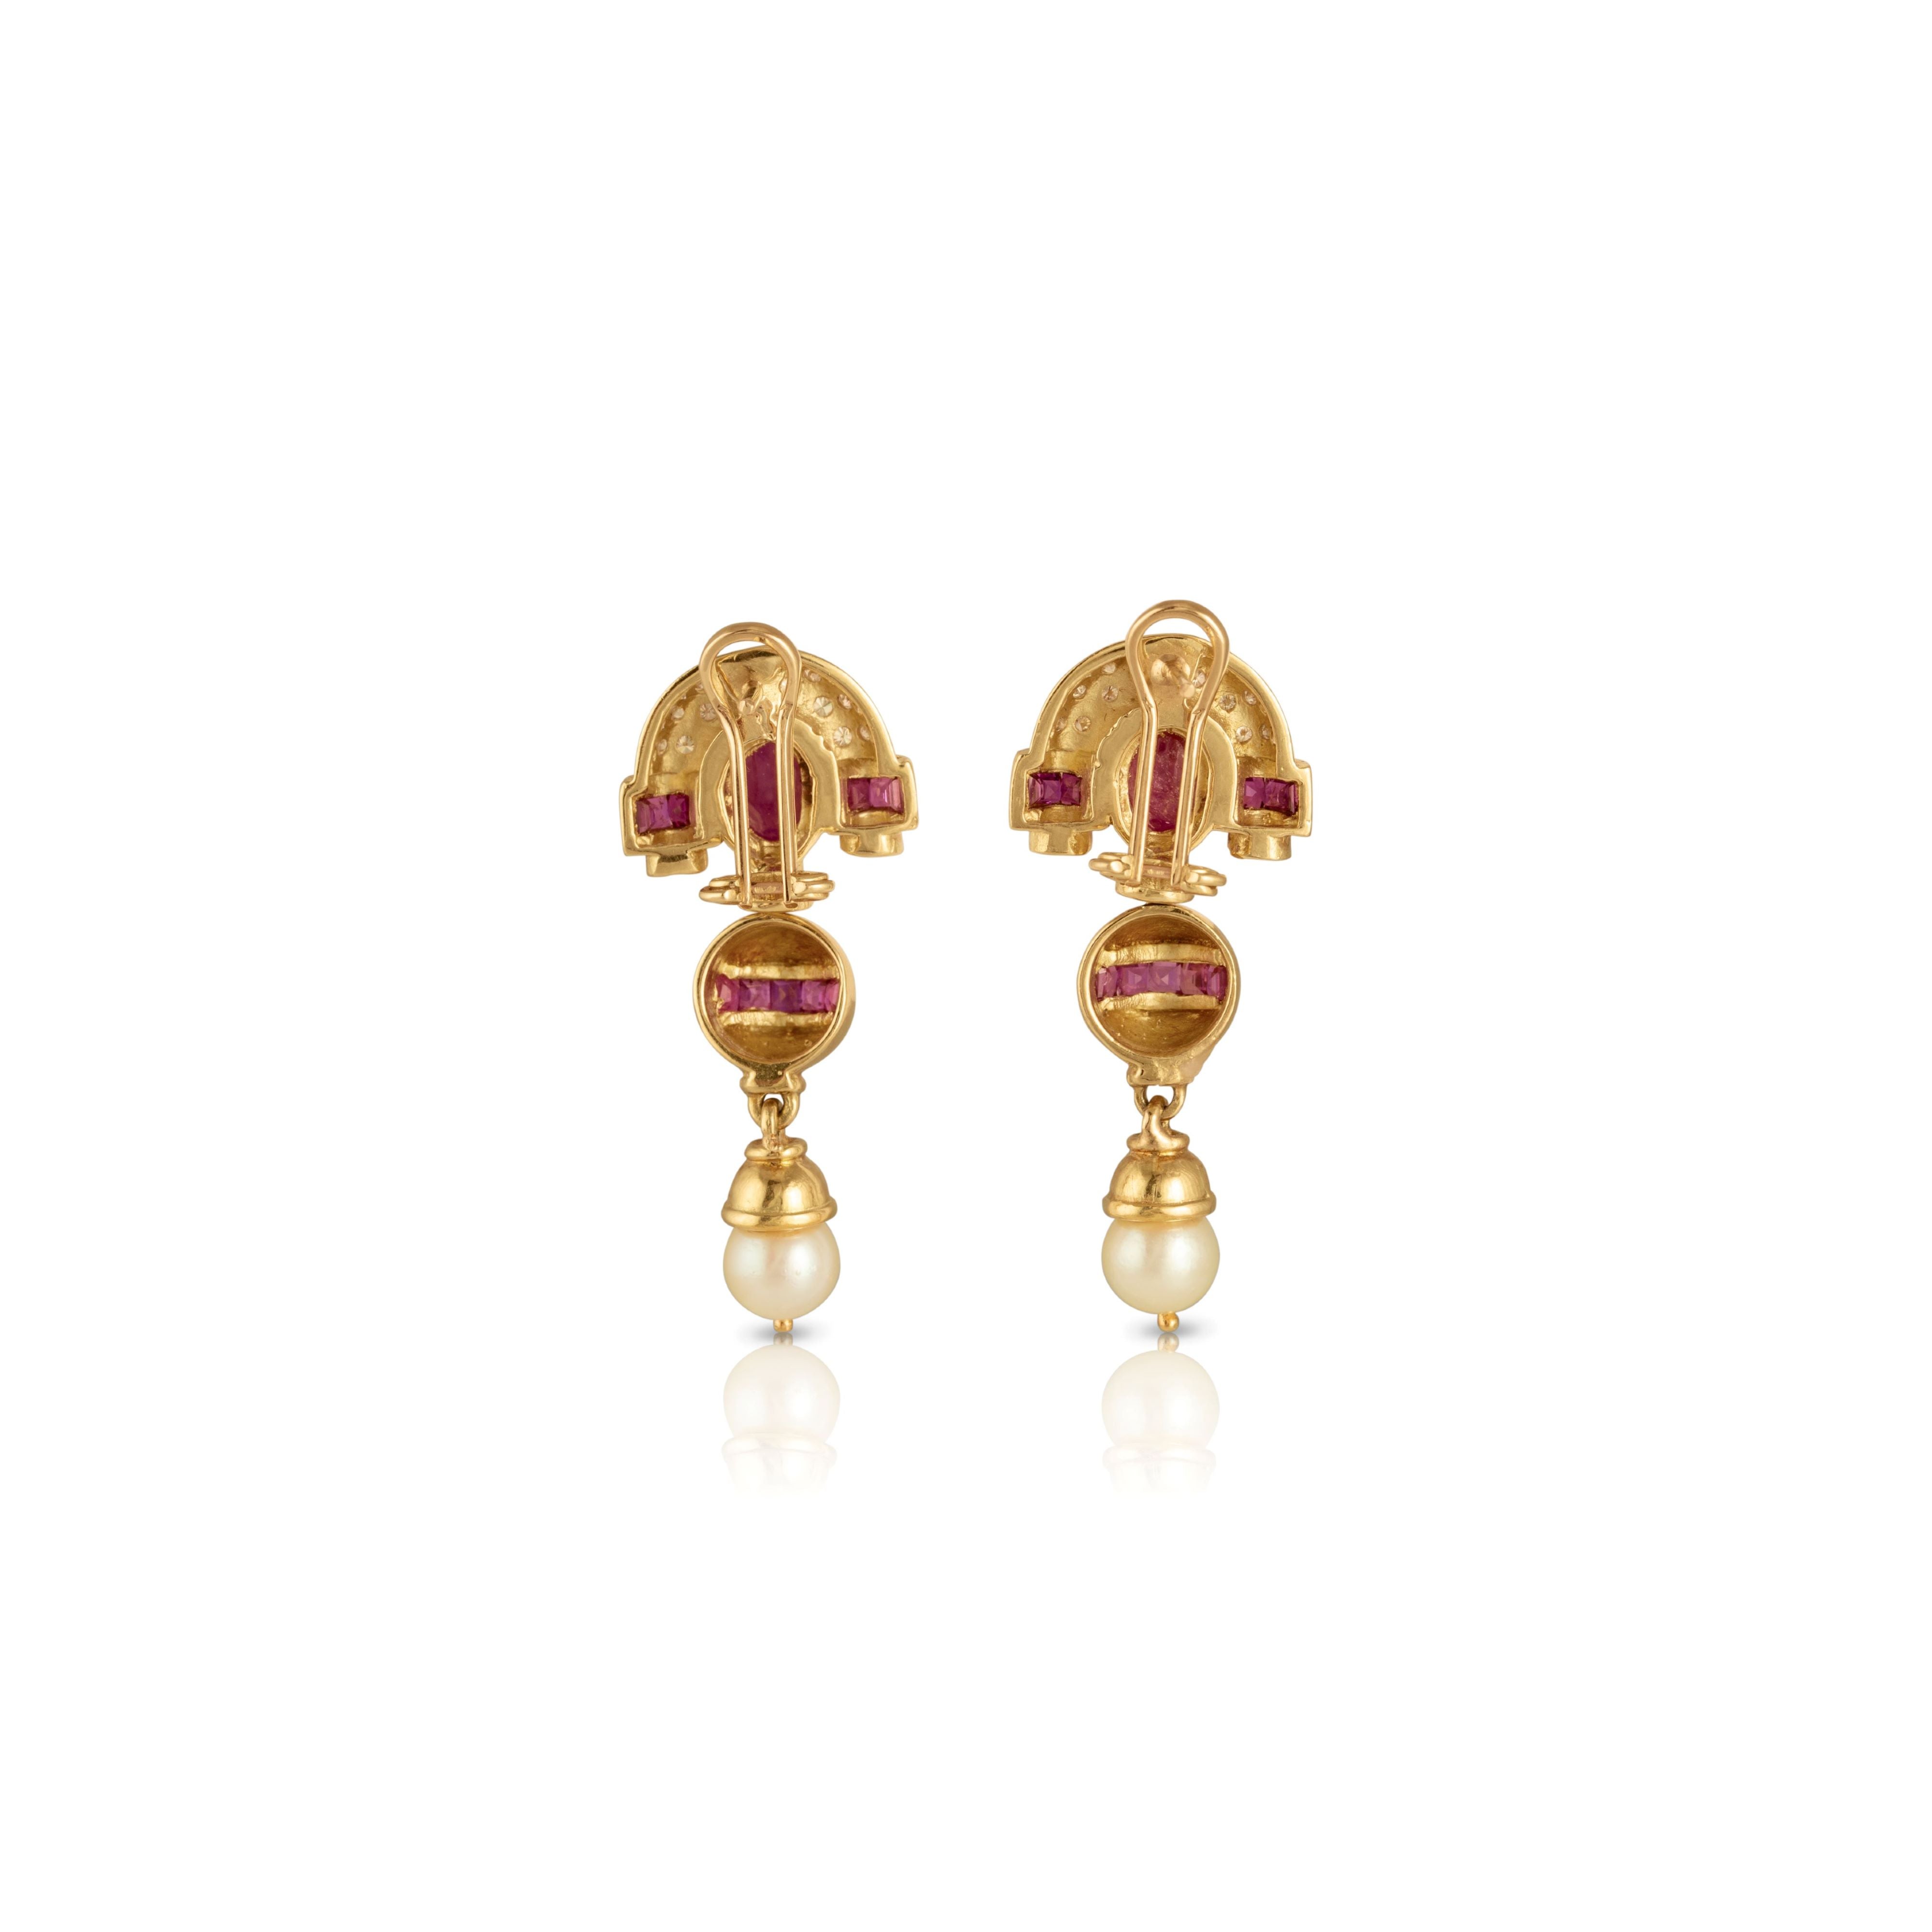 Closure side of 18ct gold dangle earrings.